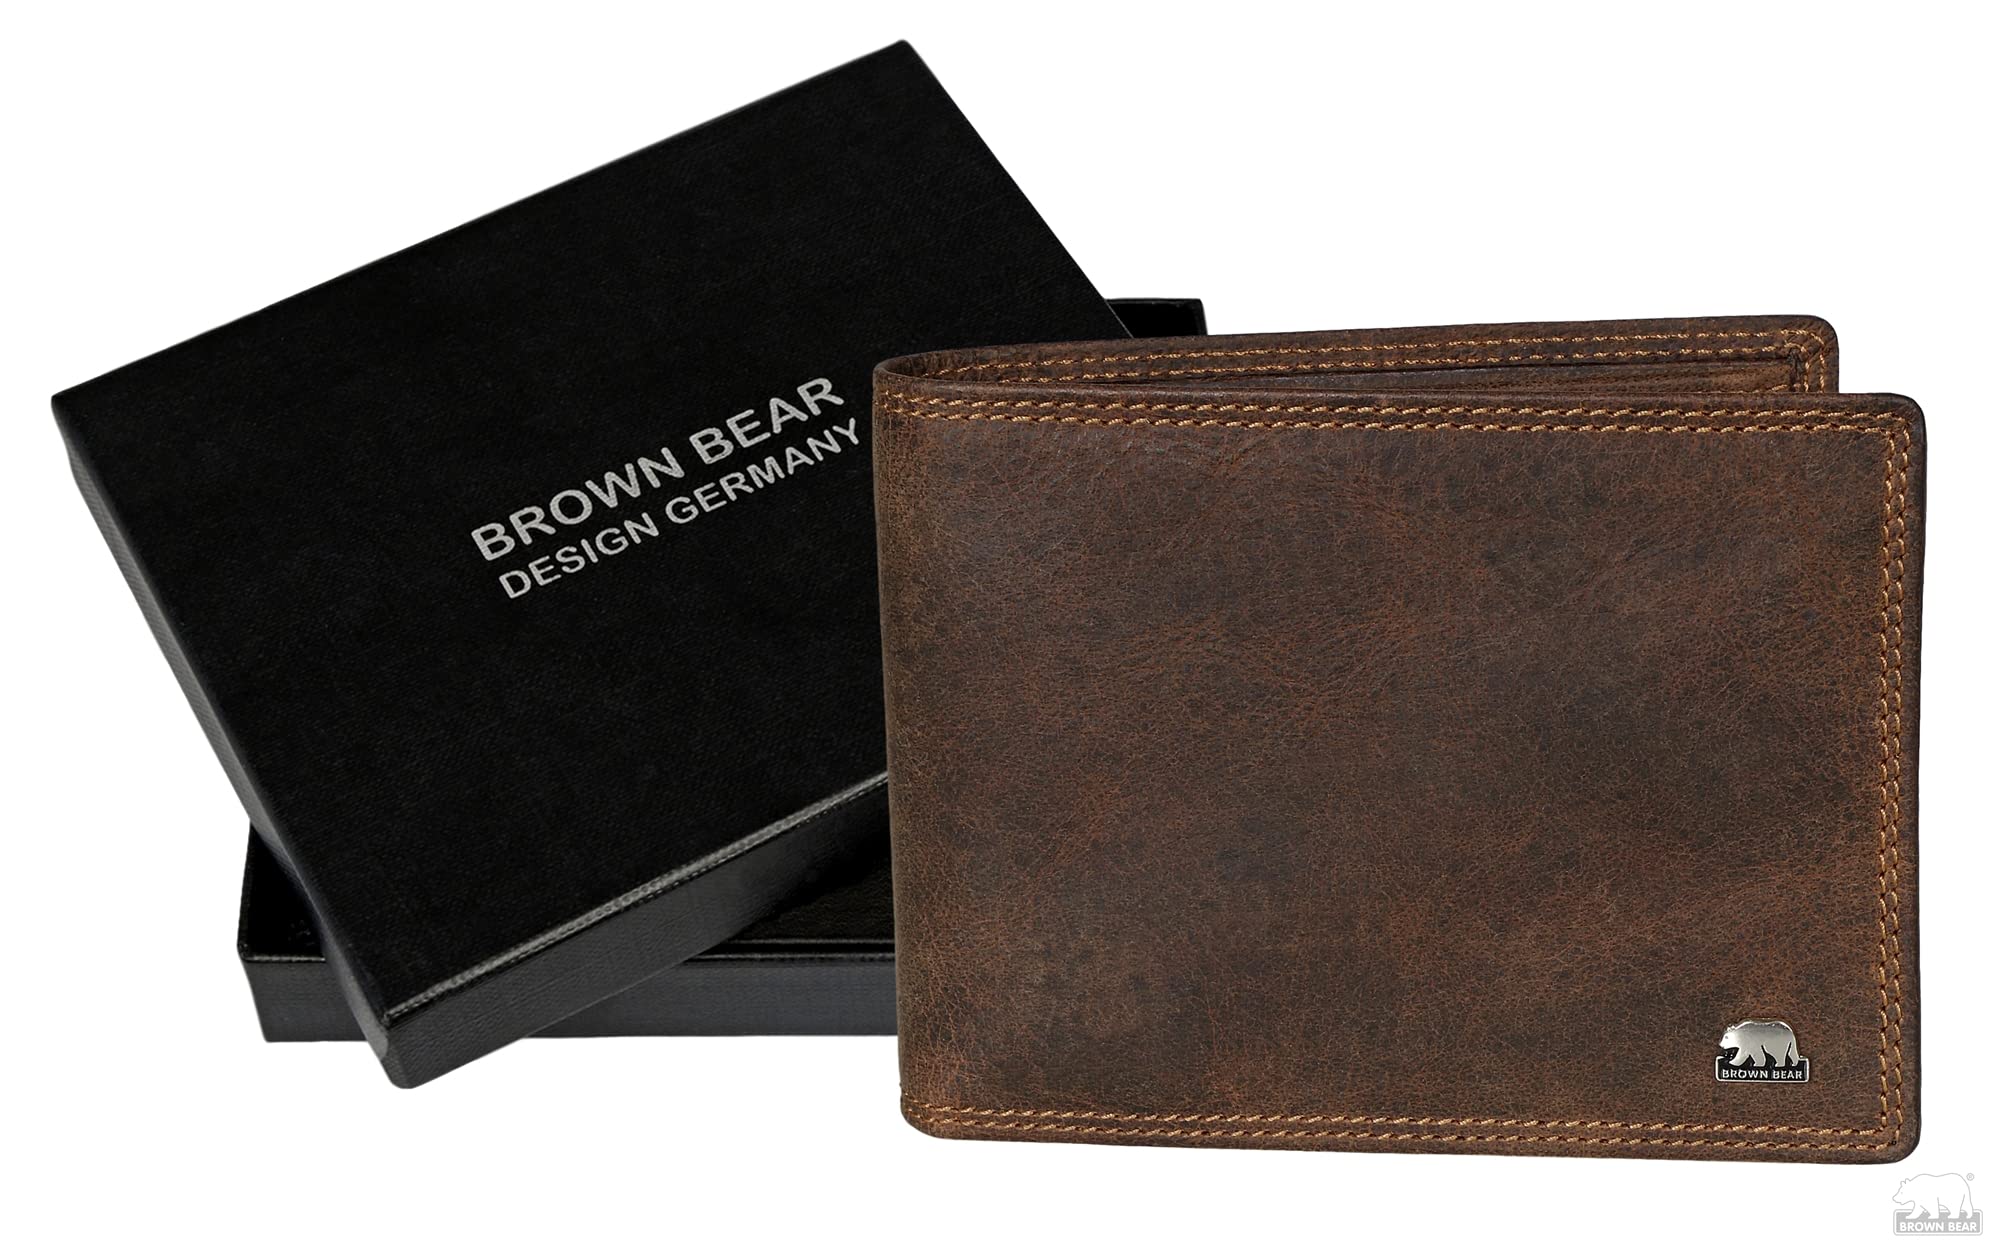 Brown Bear Classic 8005 D - Geldbörse